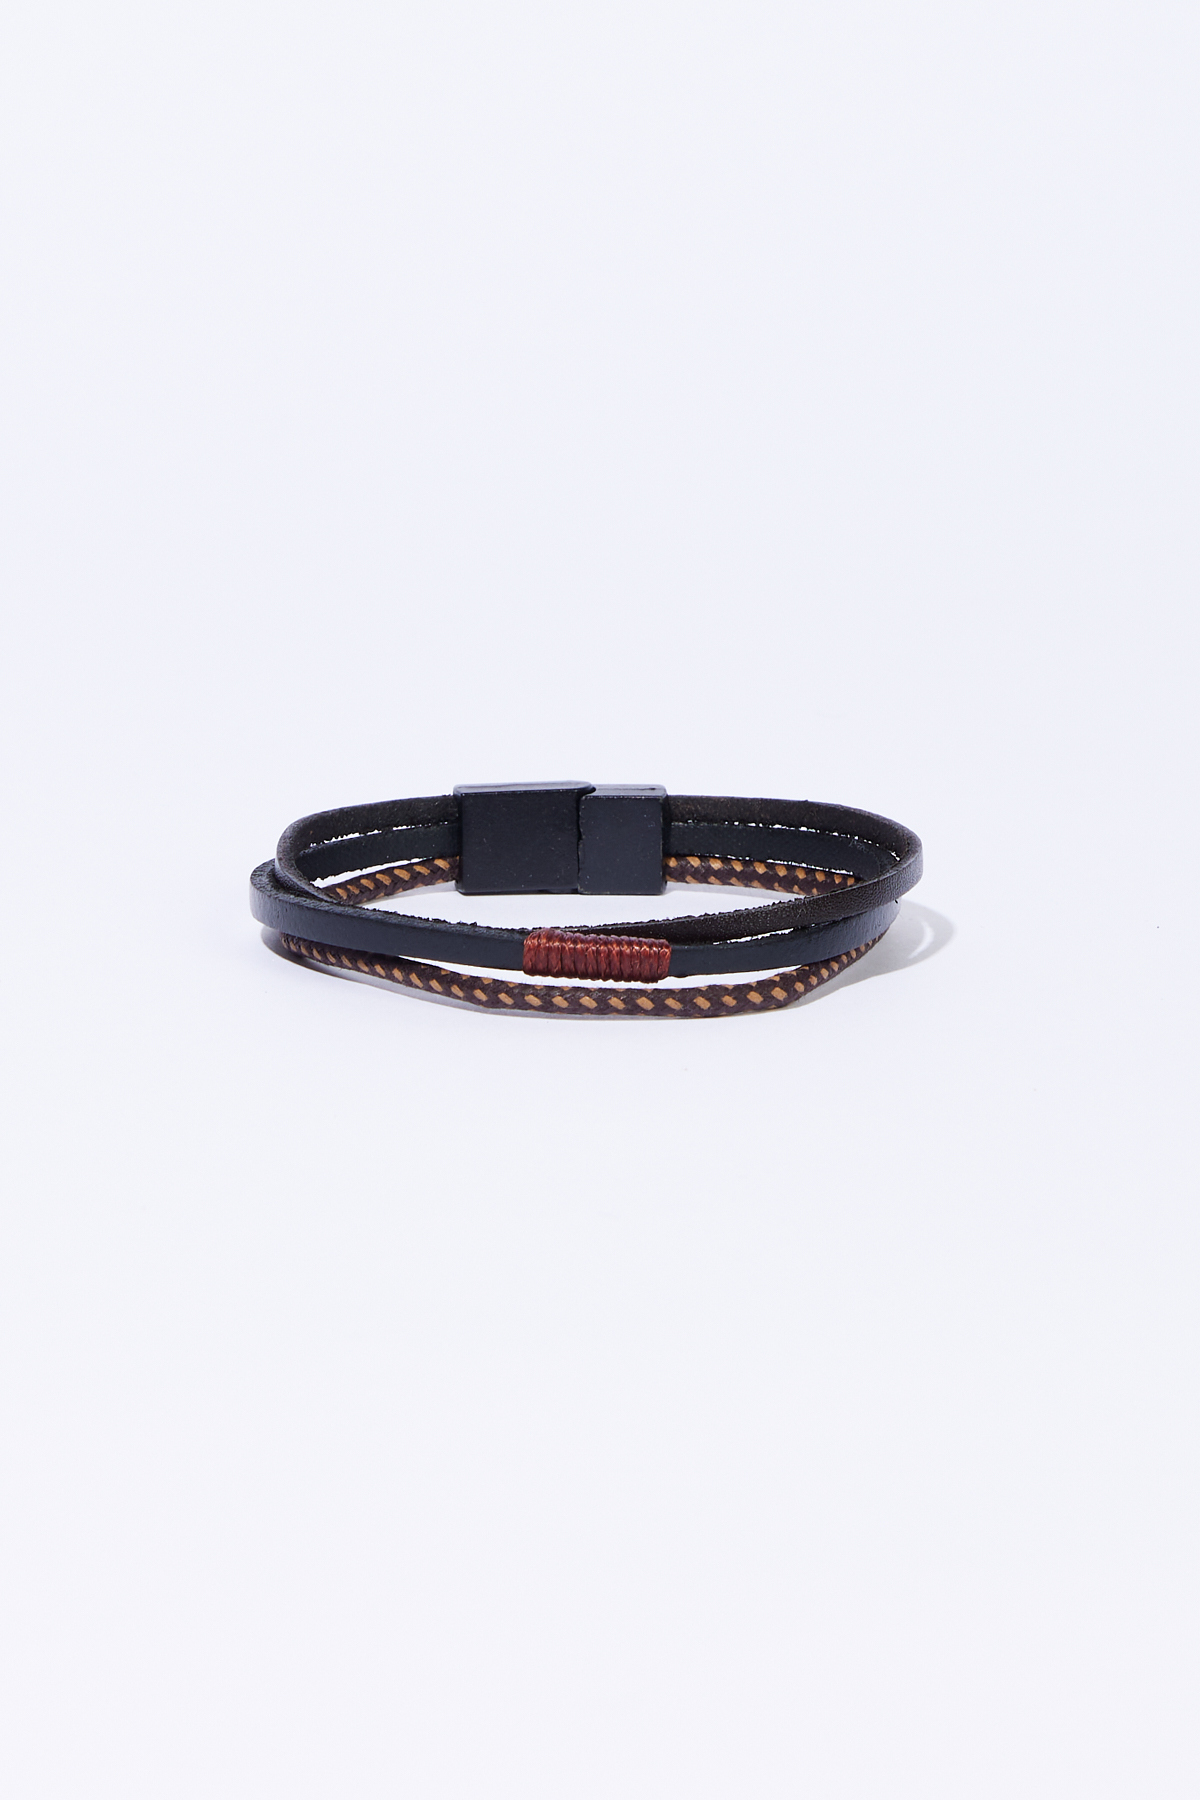 ALTINYILDIZ CLASSICS Men's Black-Brown 100% Leather Bracelet